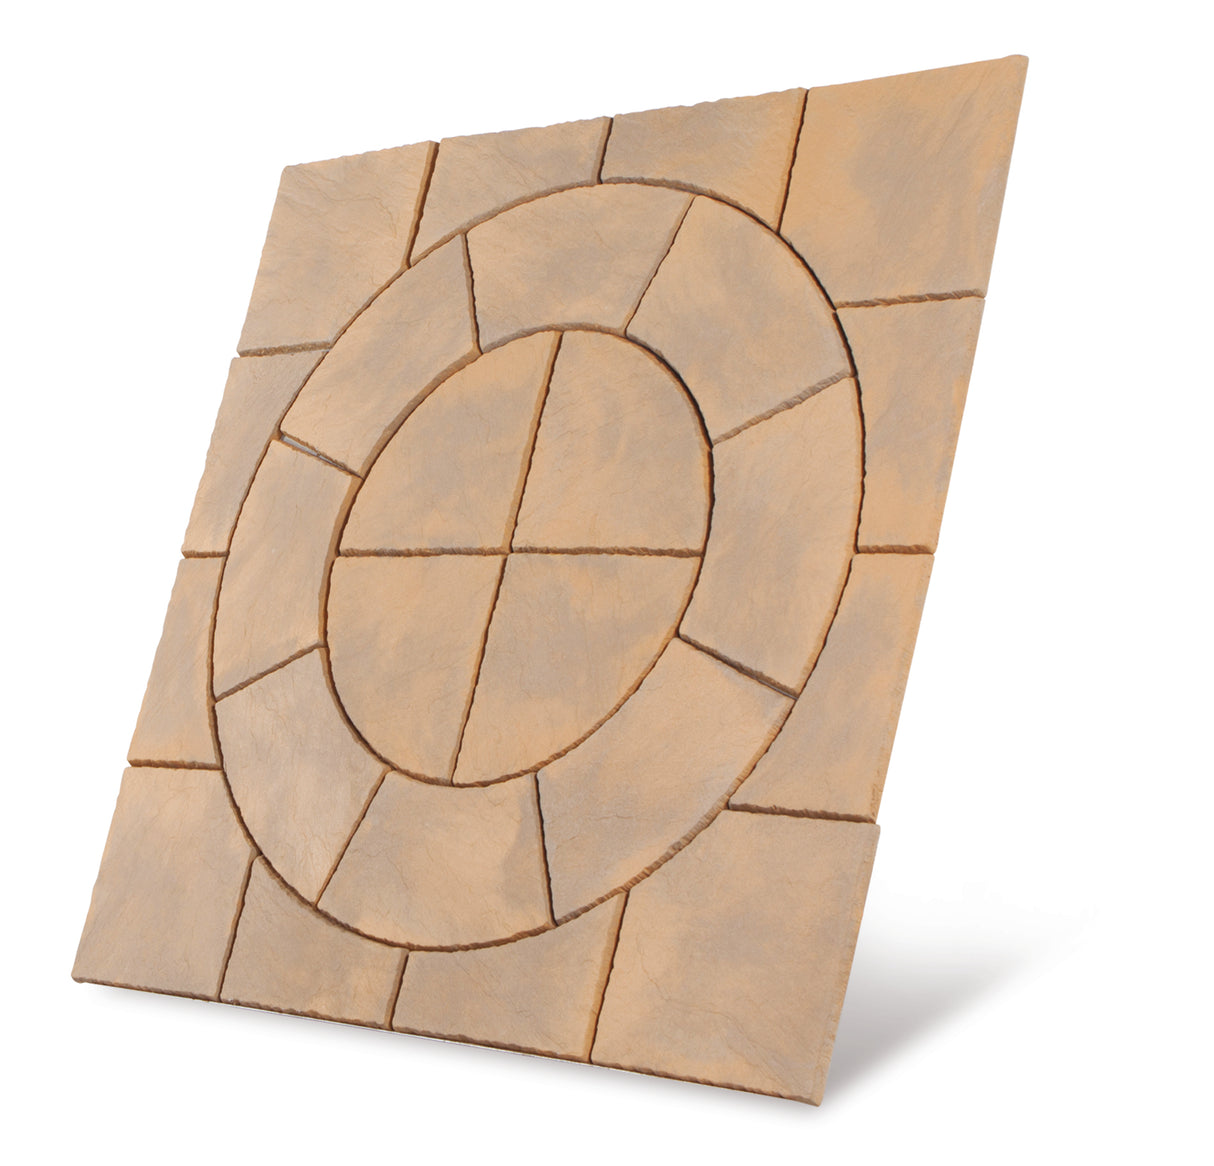 Bowland Stone Chalice Circle Patio Paving Kits - Honey Brown - 3.24m²